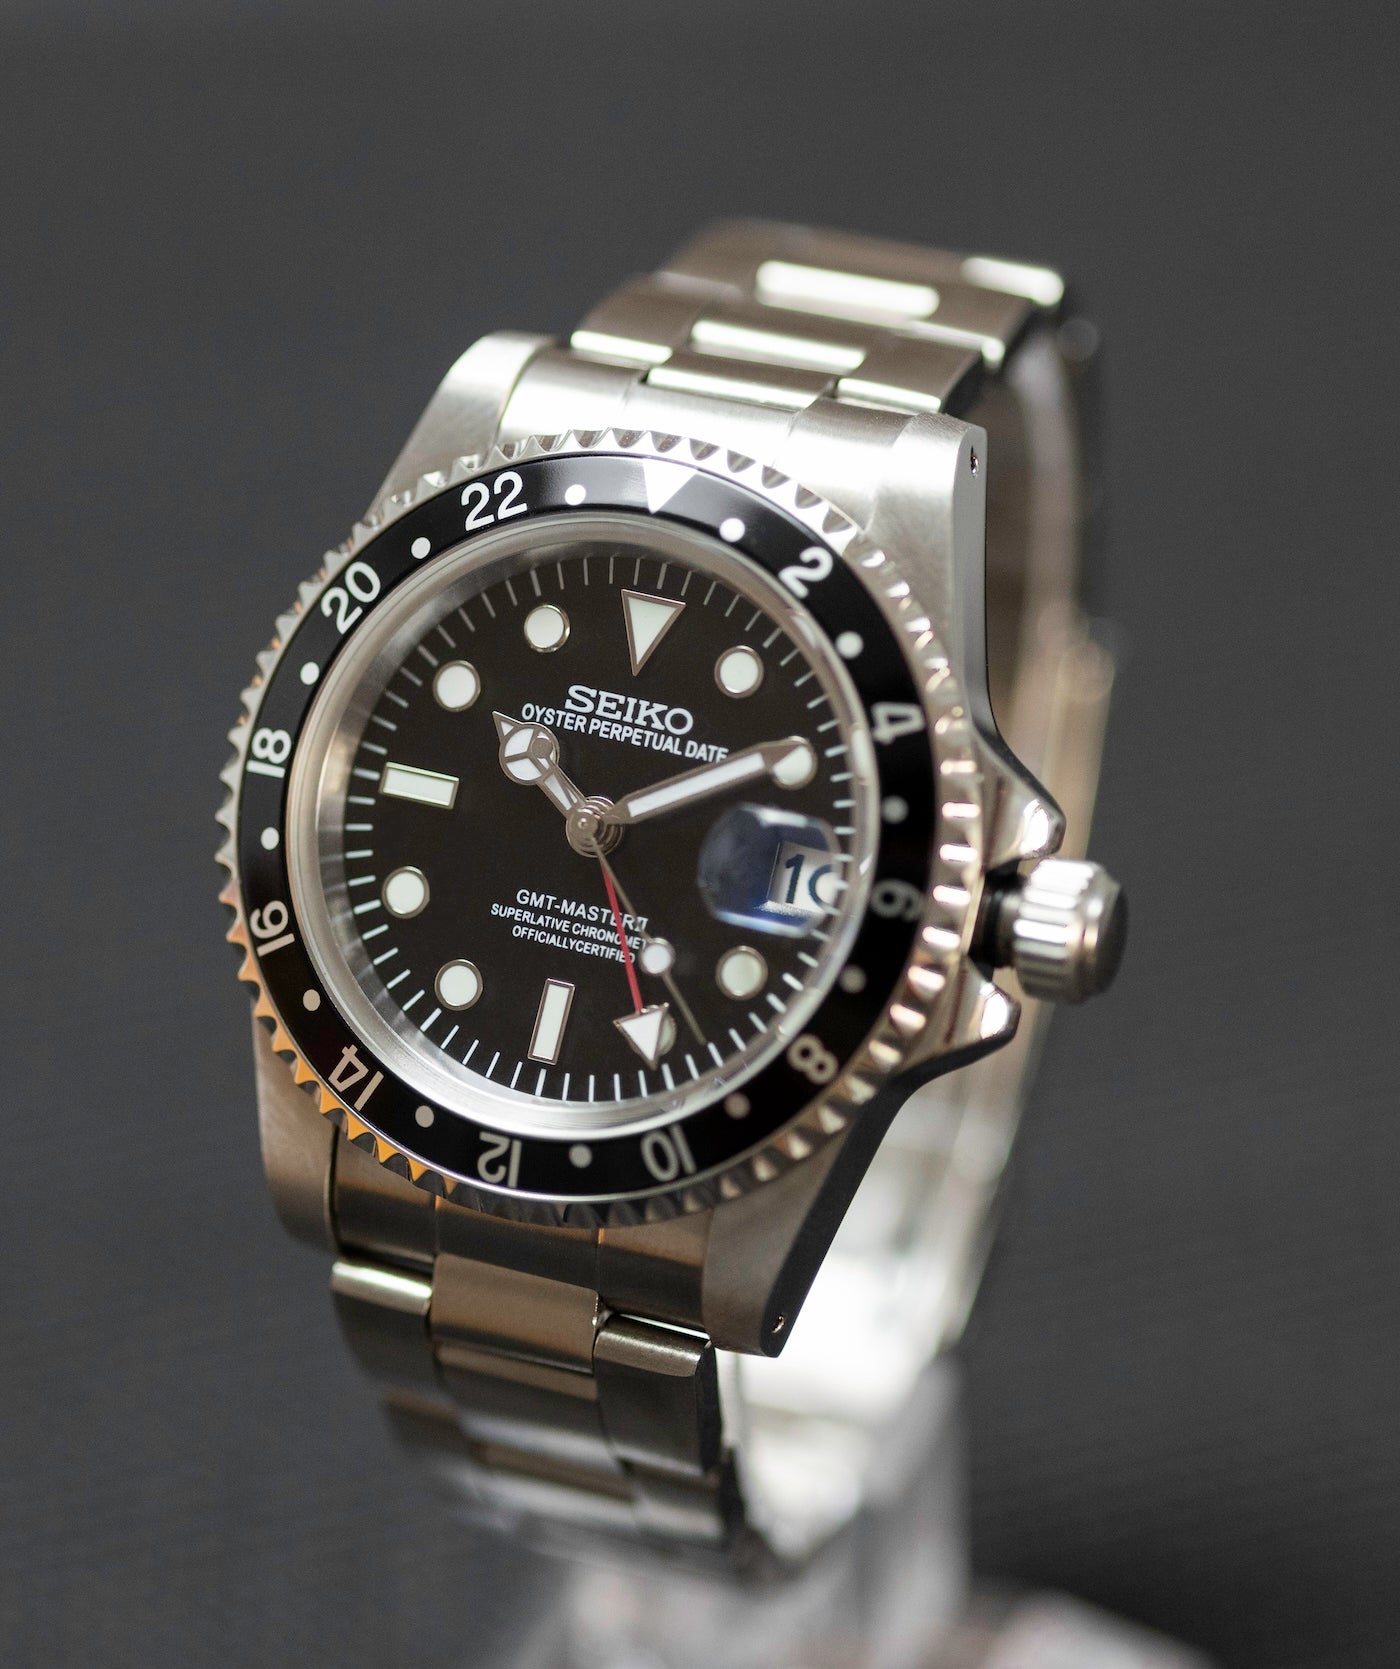 Custom Seiko Mod Vintage GMT Black Watch by Kool Mods